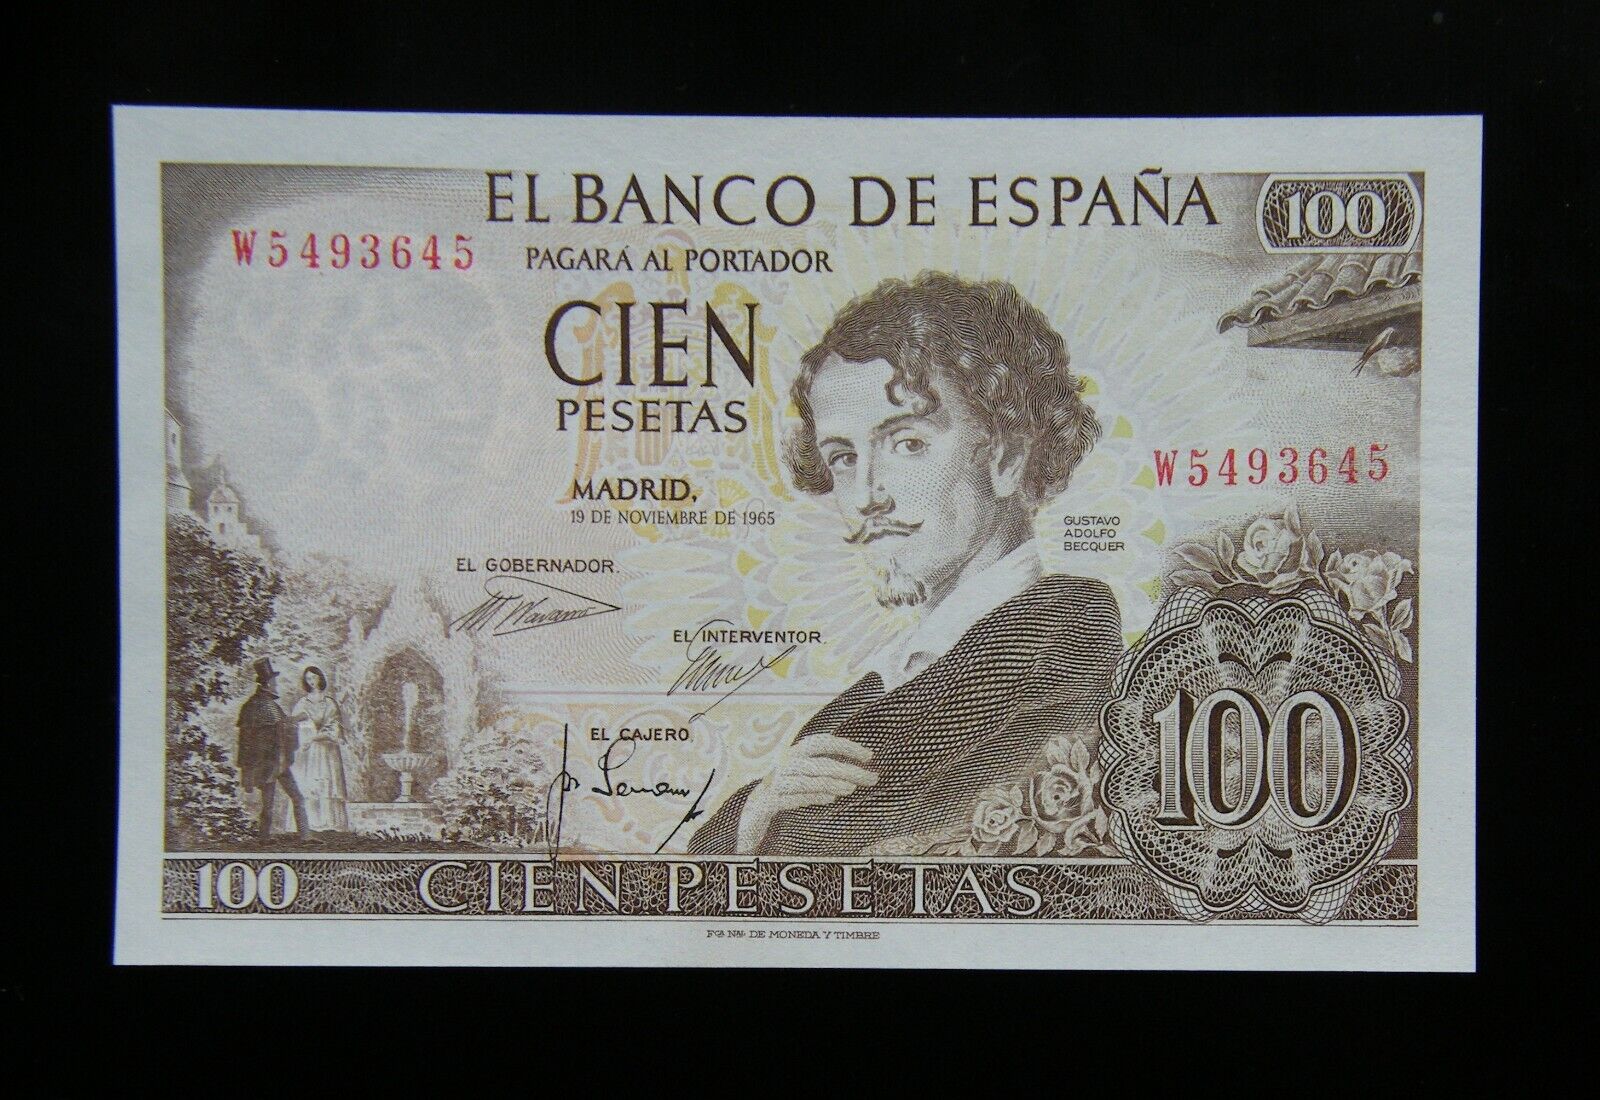 110 - Spain  Banknote 100 Pesetas 1965  Becquer"  (unc)